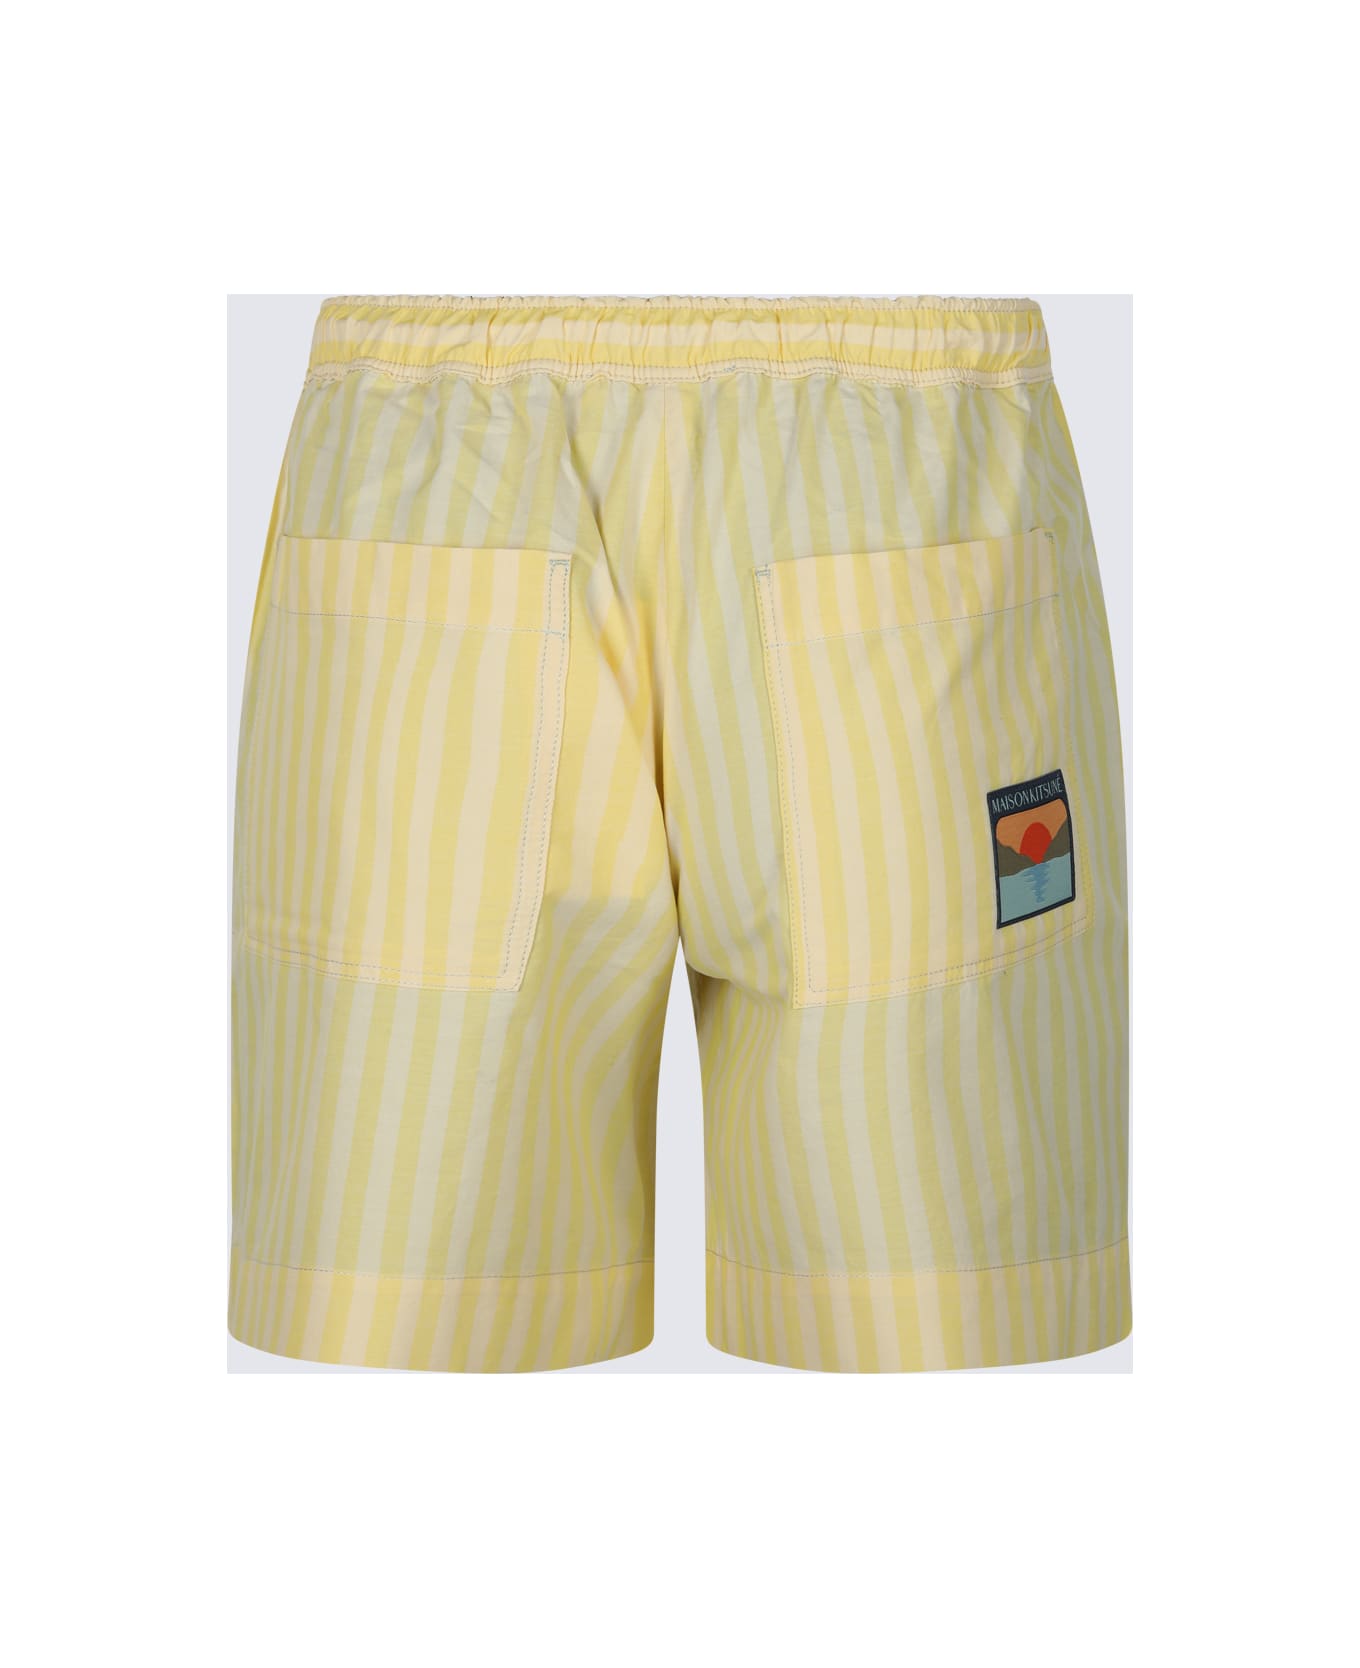 Maison Kitsuné Light Yellow Cotton Shorts - LIGHT YELLOW STRIPES